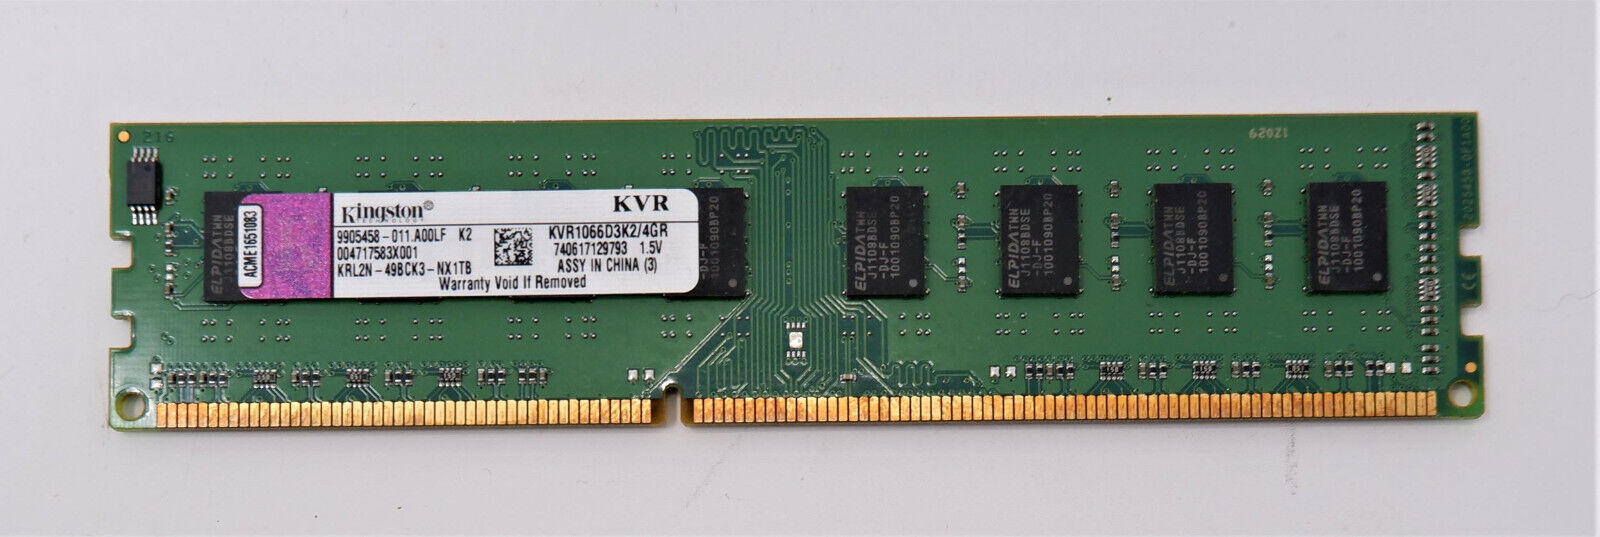 KINGSTON KVR1066D3K2/4GR 2GB DDR3-1066 PC3-8500 1.5V CL7 RAM MEMORY - NICE